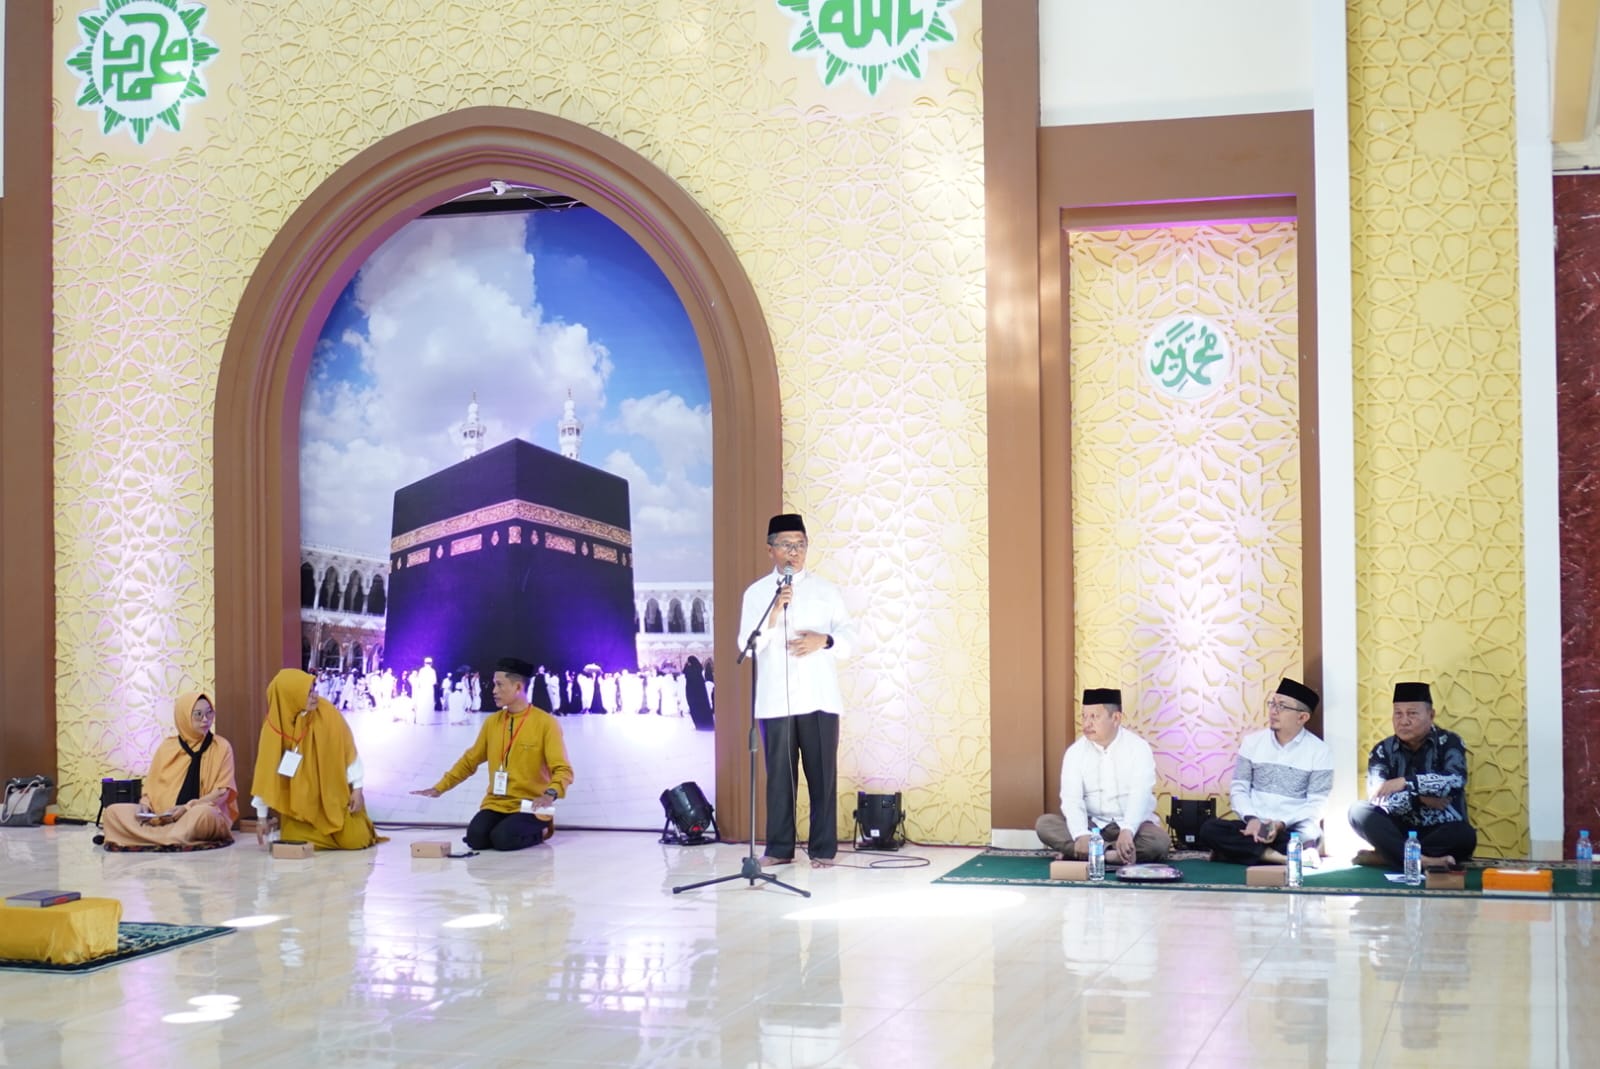 Tablig Akbar dan Halal Bi Halal Masjid Darul Arqam